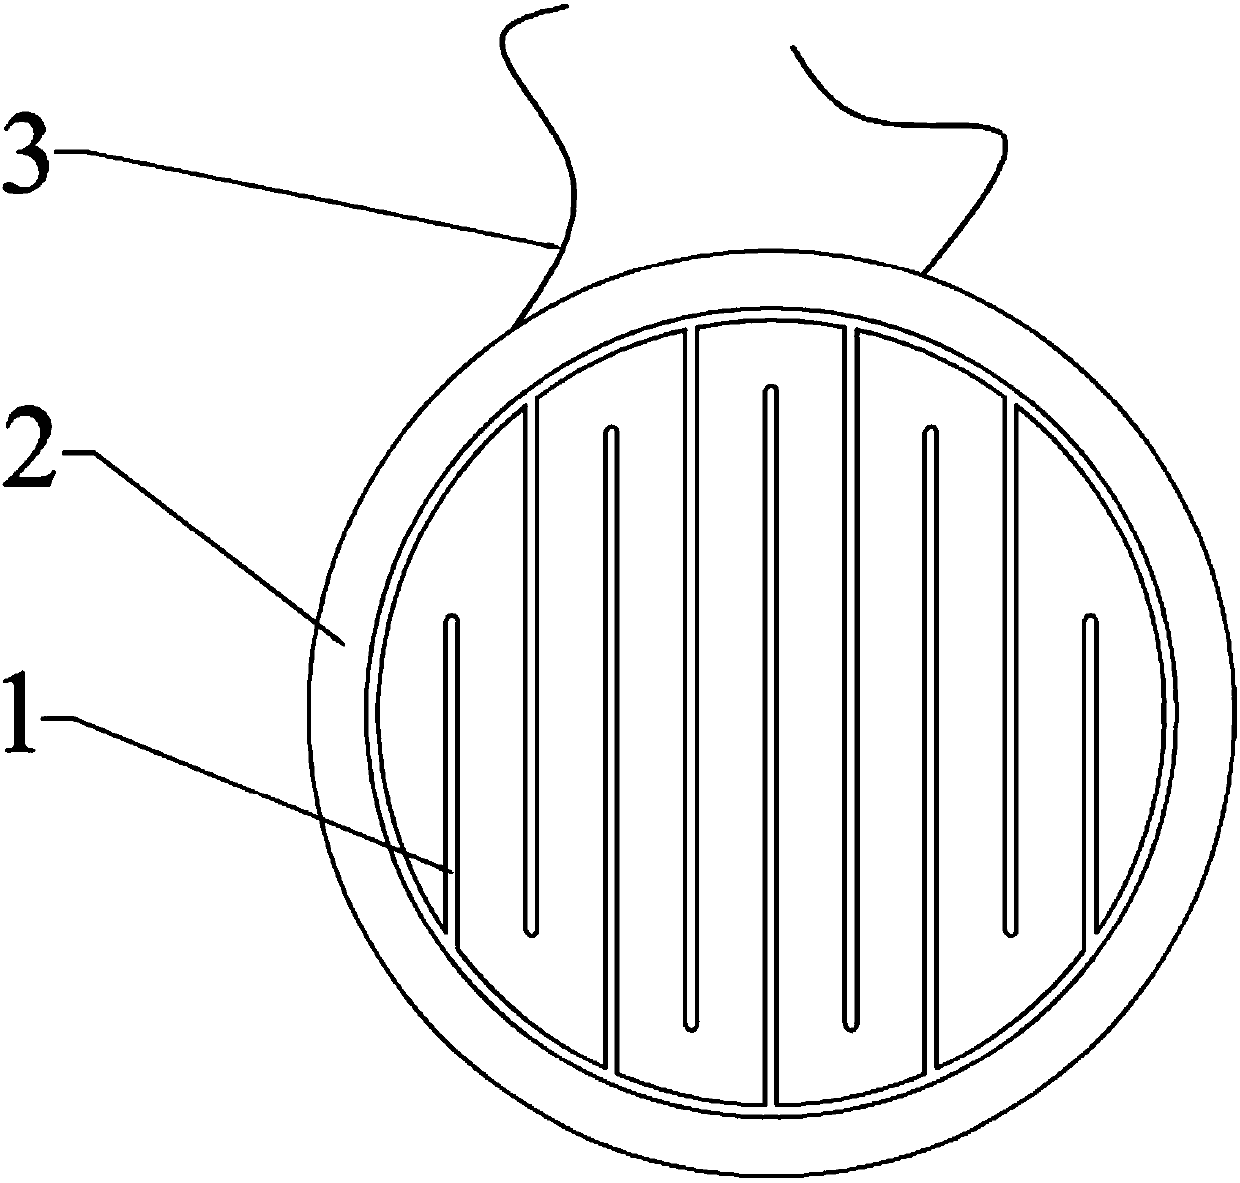 Planar loudspeaker composite vibrating diaphragm of and earphone loudspeaker with same